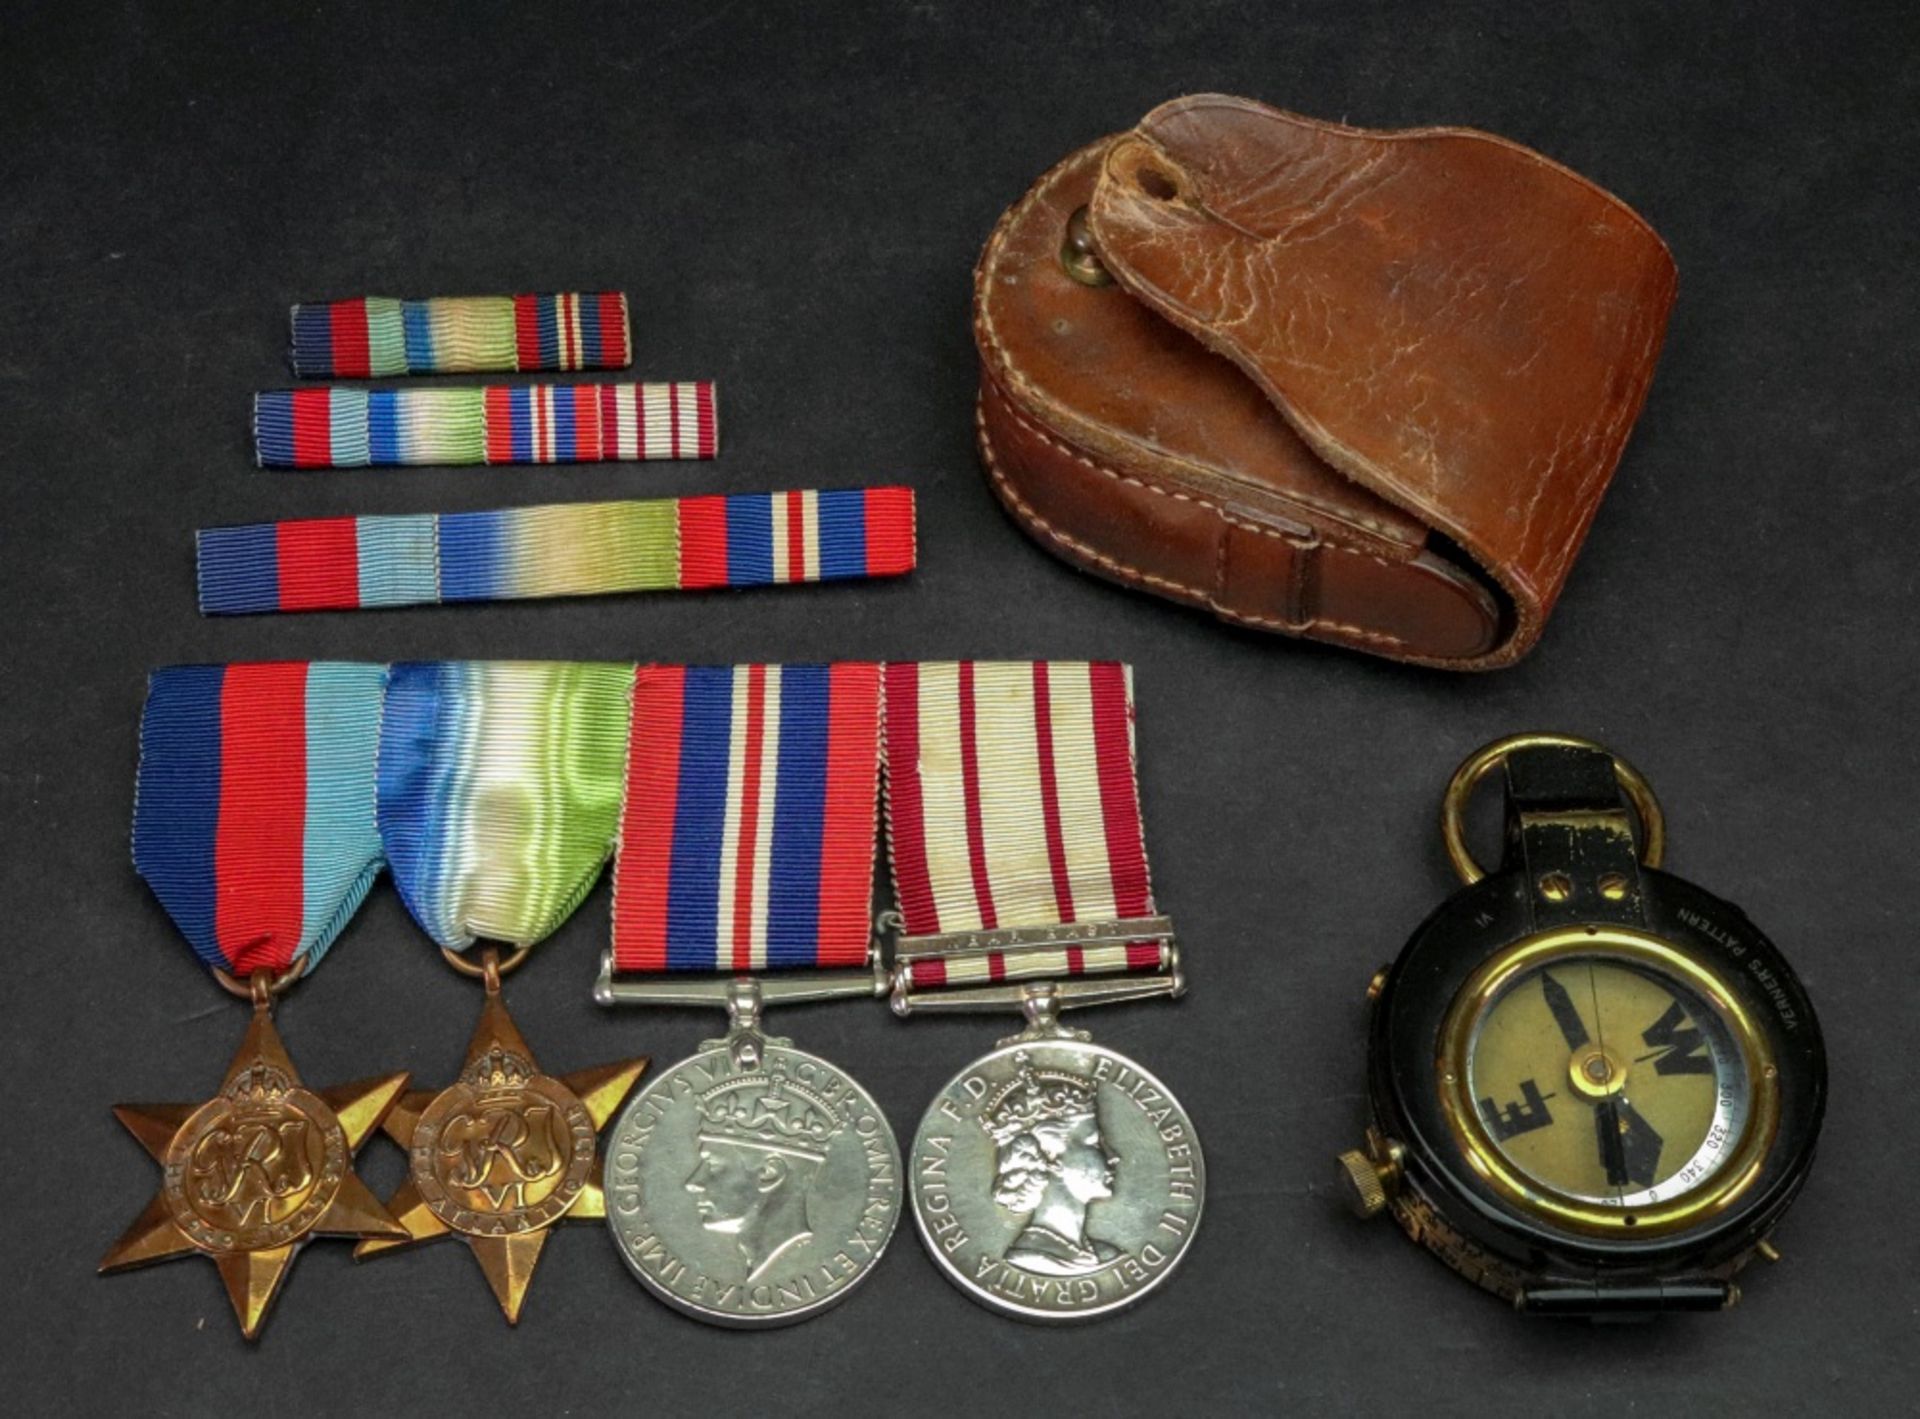 A Second World War medal group to Lt Cdr P.J.D. Jeffreys R.N.